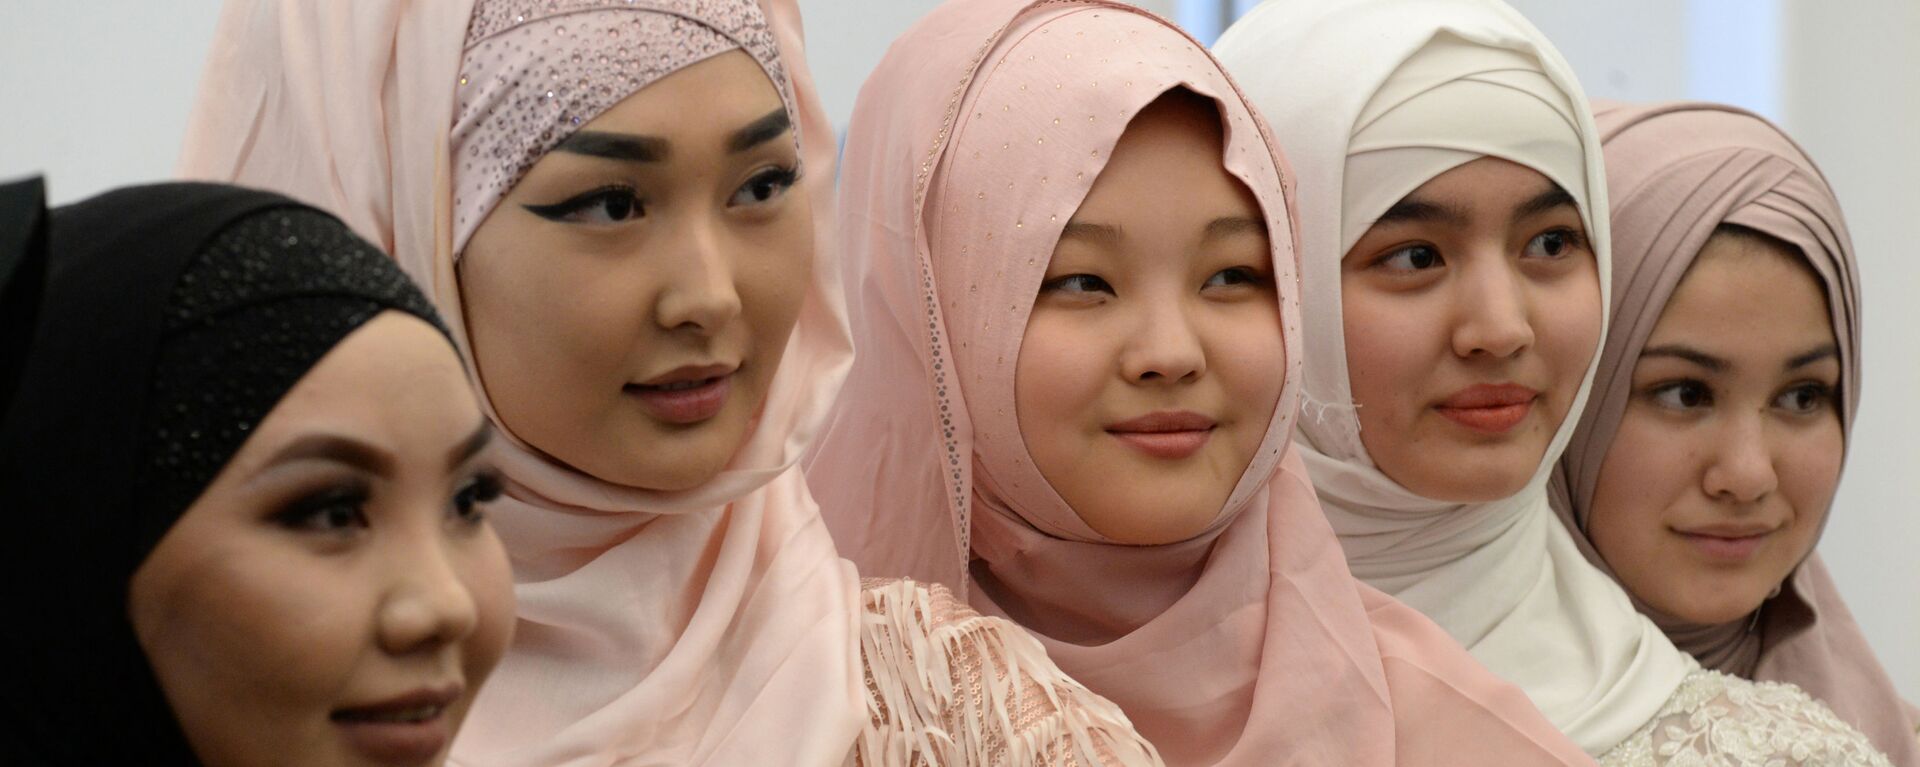 Девушки на праздновании Всемирного дня хиджаба в Бишкеке, Кыргызстан - Sputnik Таджикистан, 1920, 30.01.2021